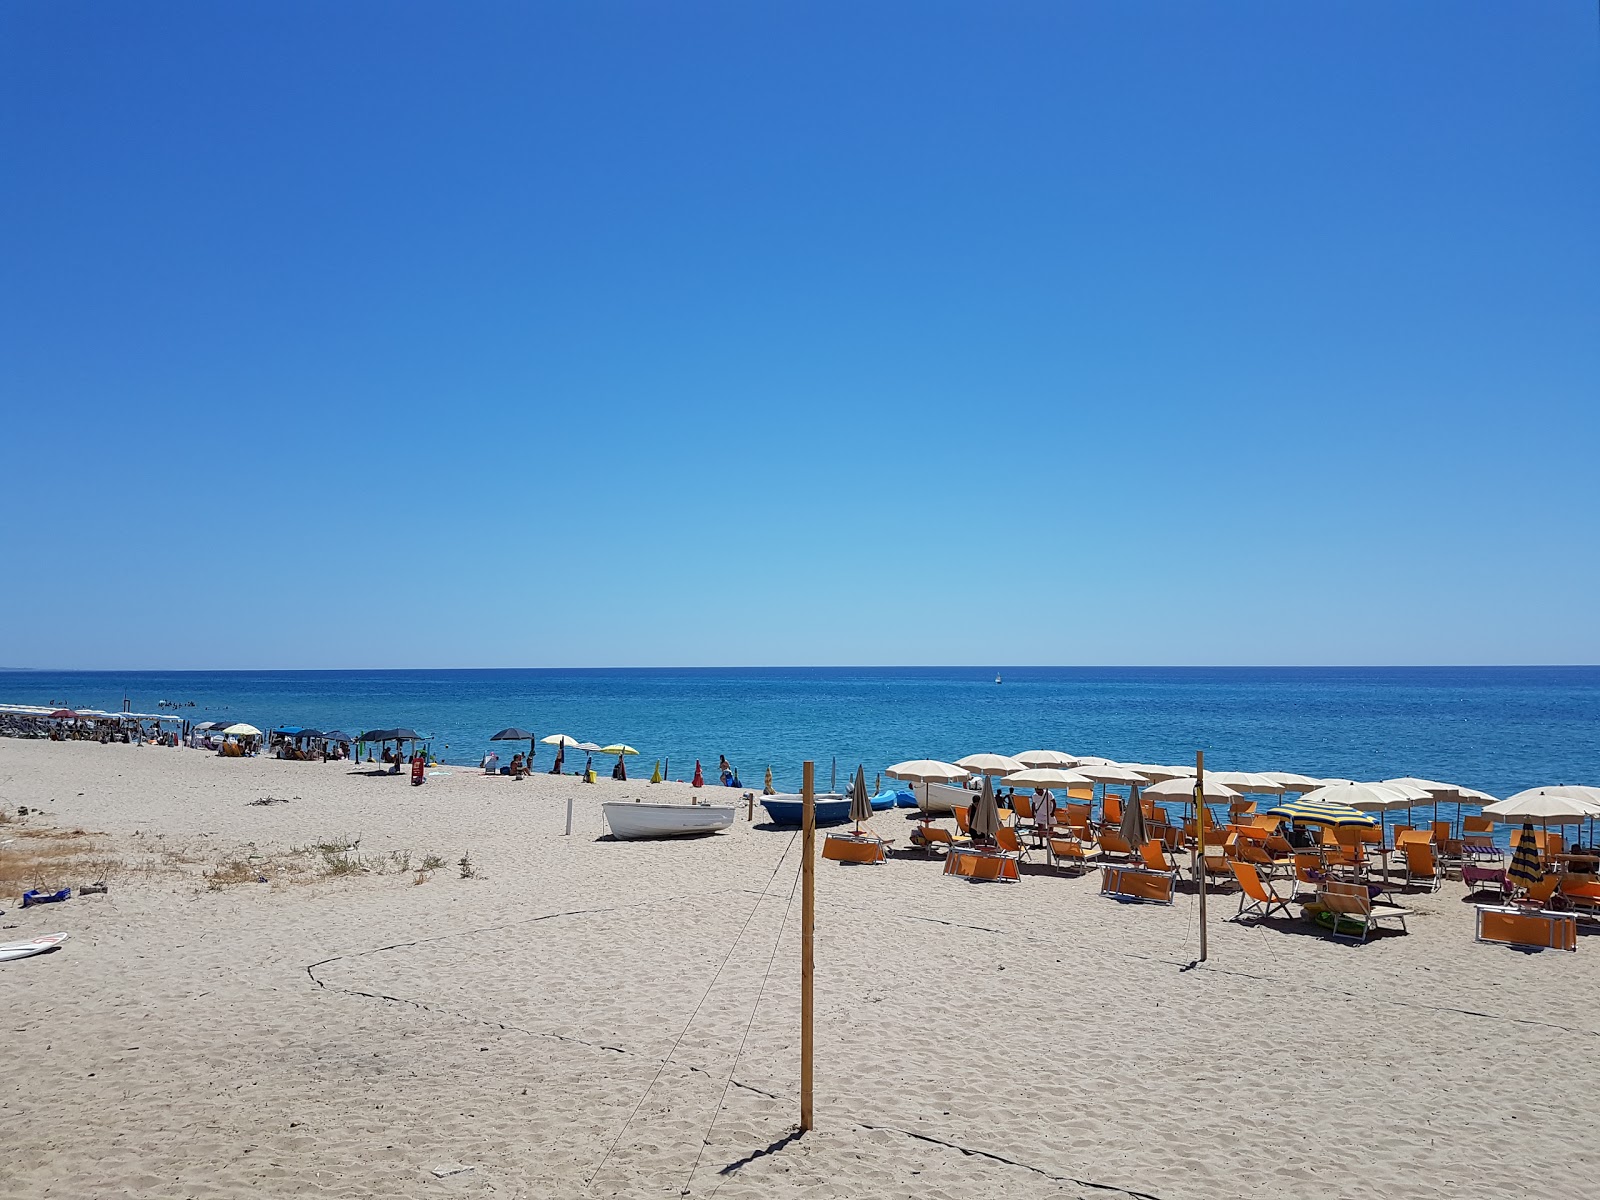 Photo of Villaggio Carrao beach - popular place among relax connoisseurs